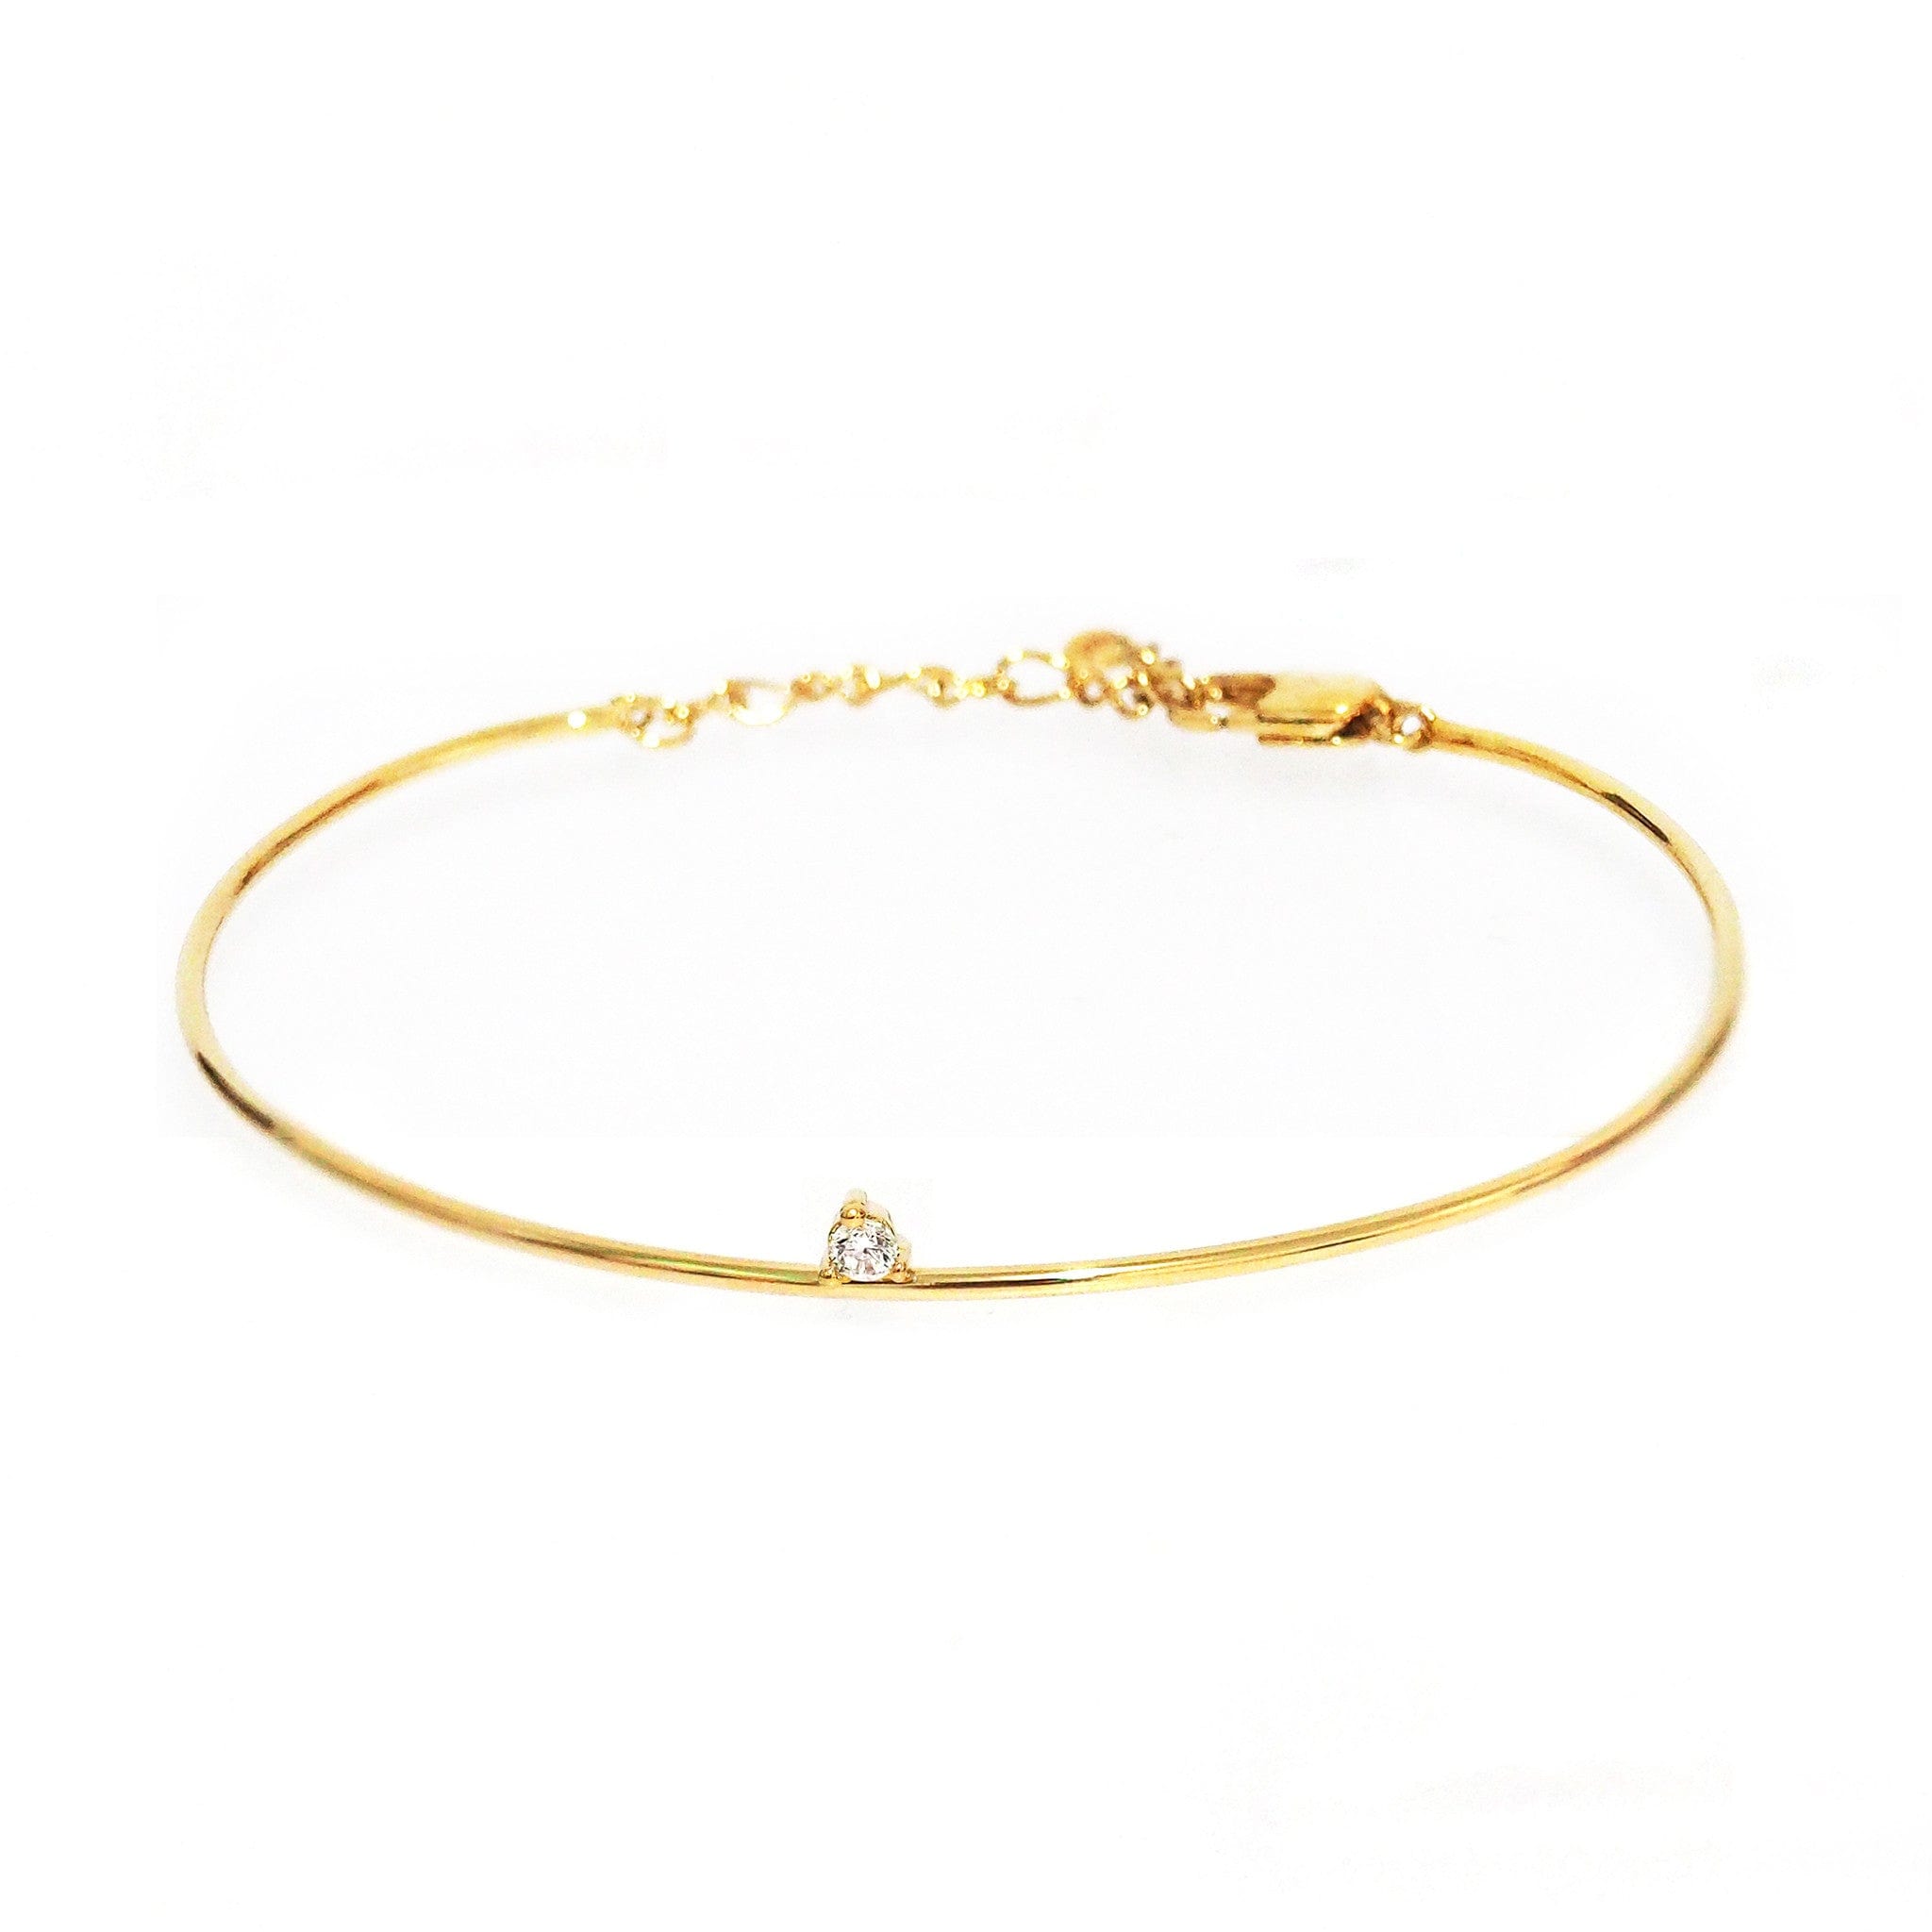 TAI JEWELRY Bracelet Gold/Clear Single Tiny Stone Bangle Bracelet With Chain Closure